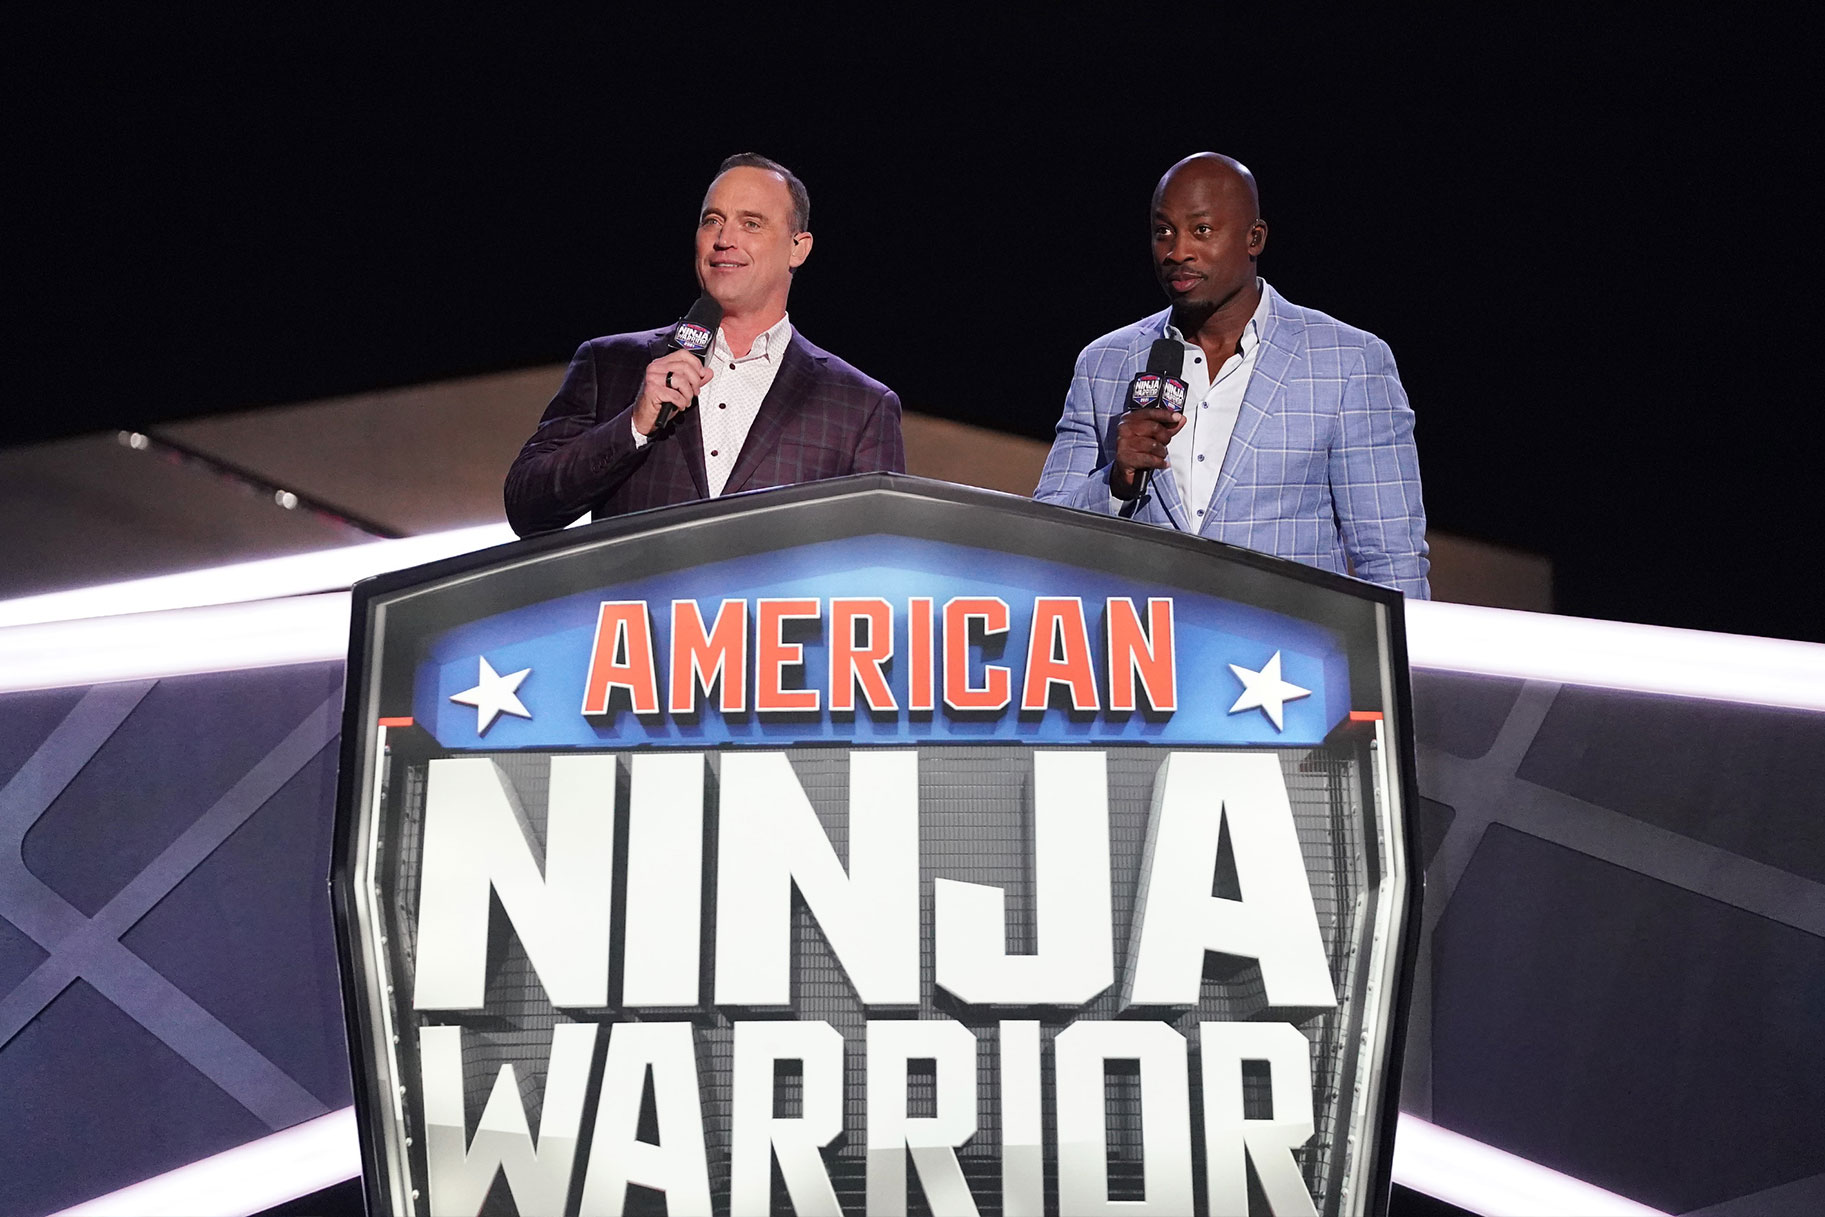 American Ninja Warrior hosts Matt Iseman and Akbar Gbajabiamila